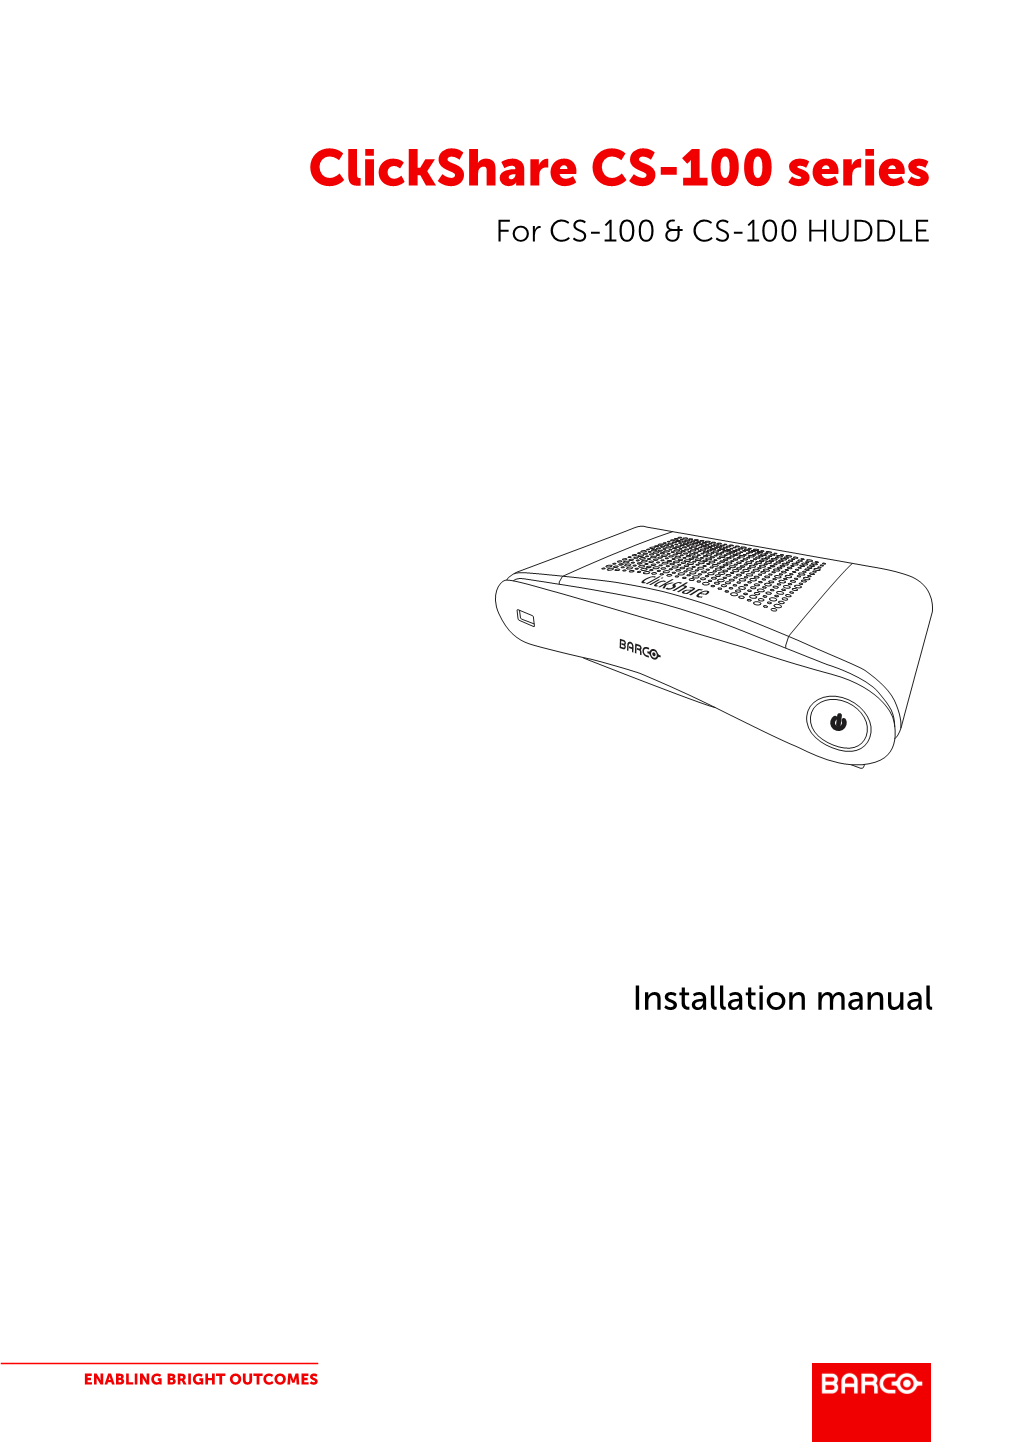 Clickshare CS-100 Series for CS-100 & CS-100 HUDDLE